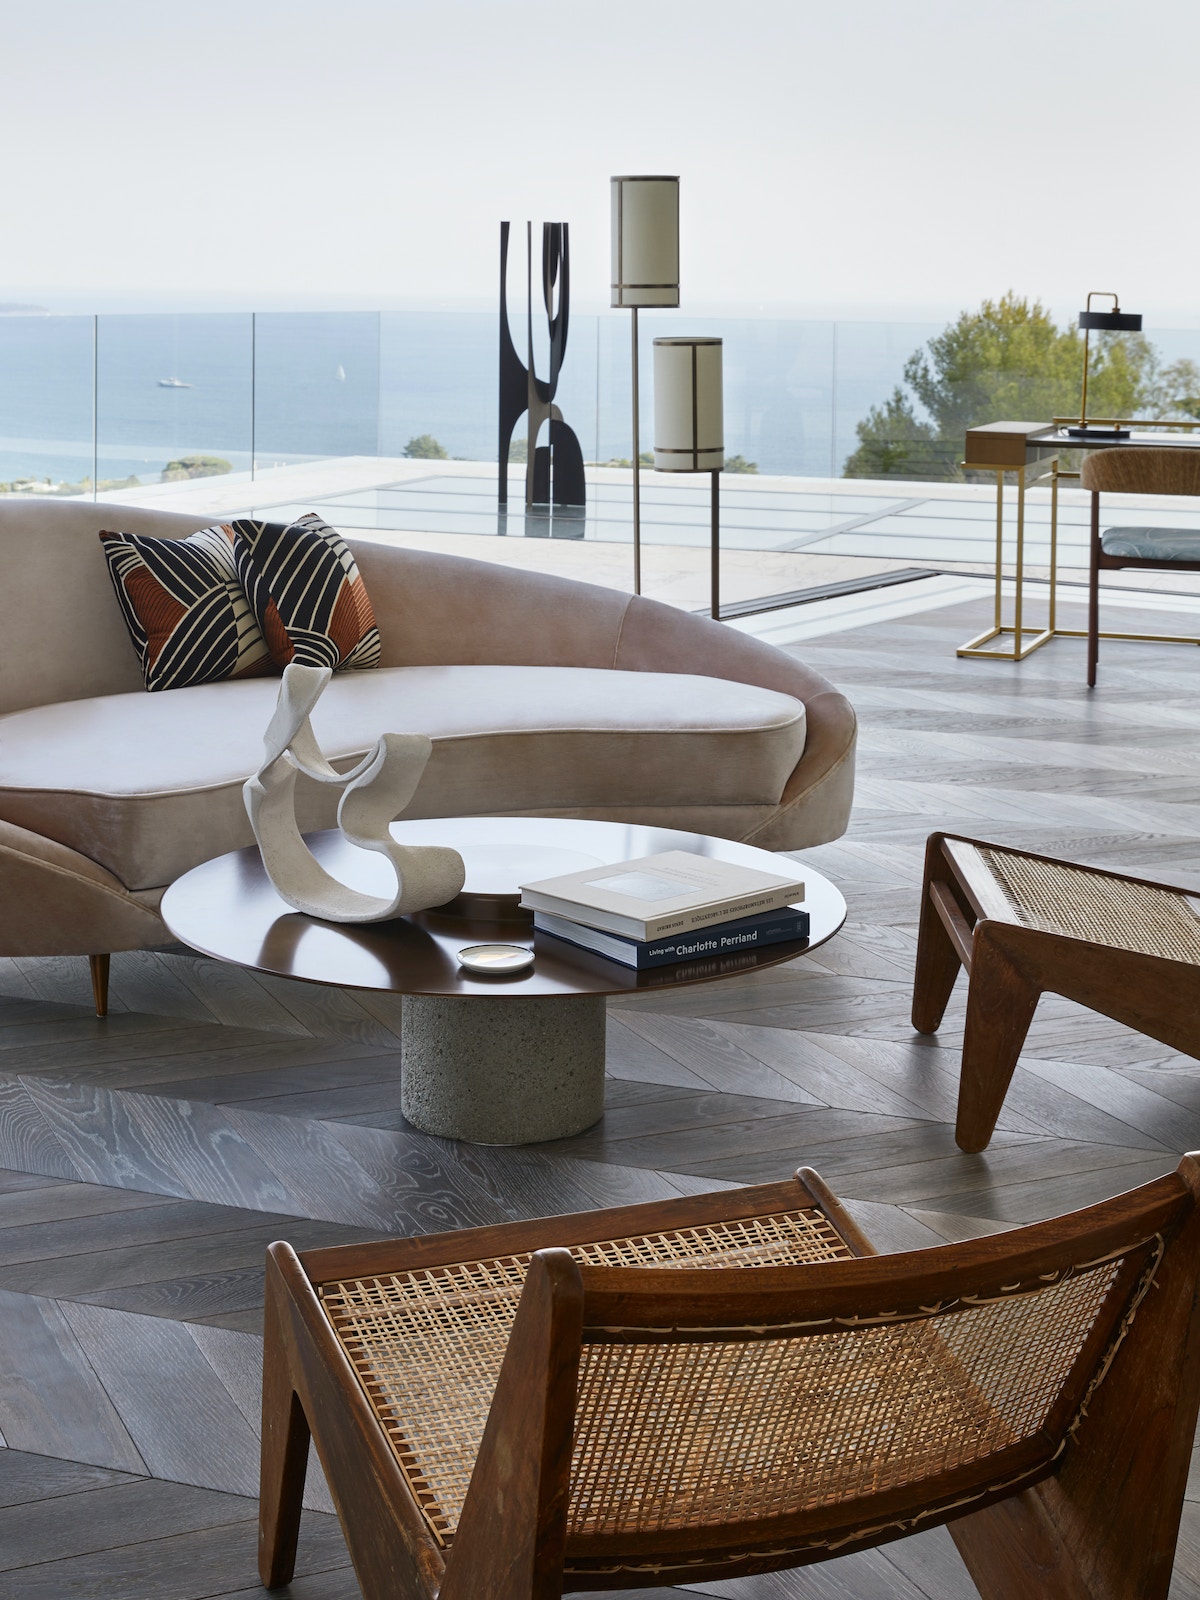 Humbert & Poyet Villa Odaya Mid-century Modern style curved cream sofa and rattanlounge chair